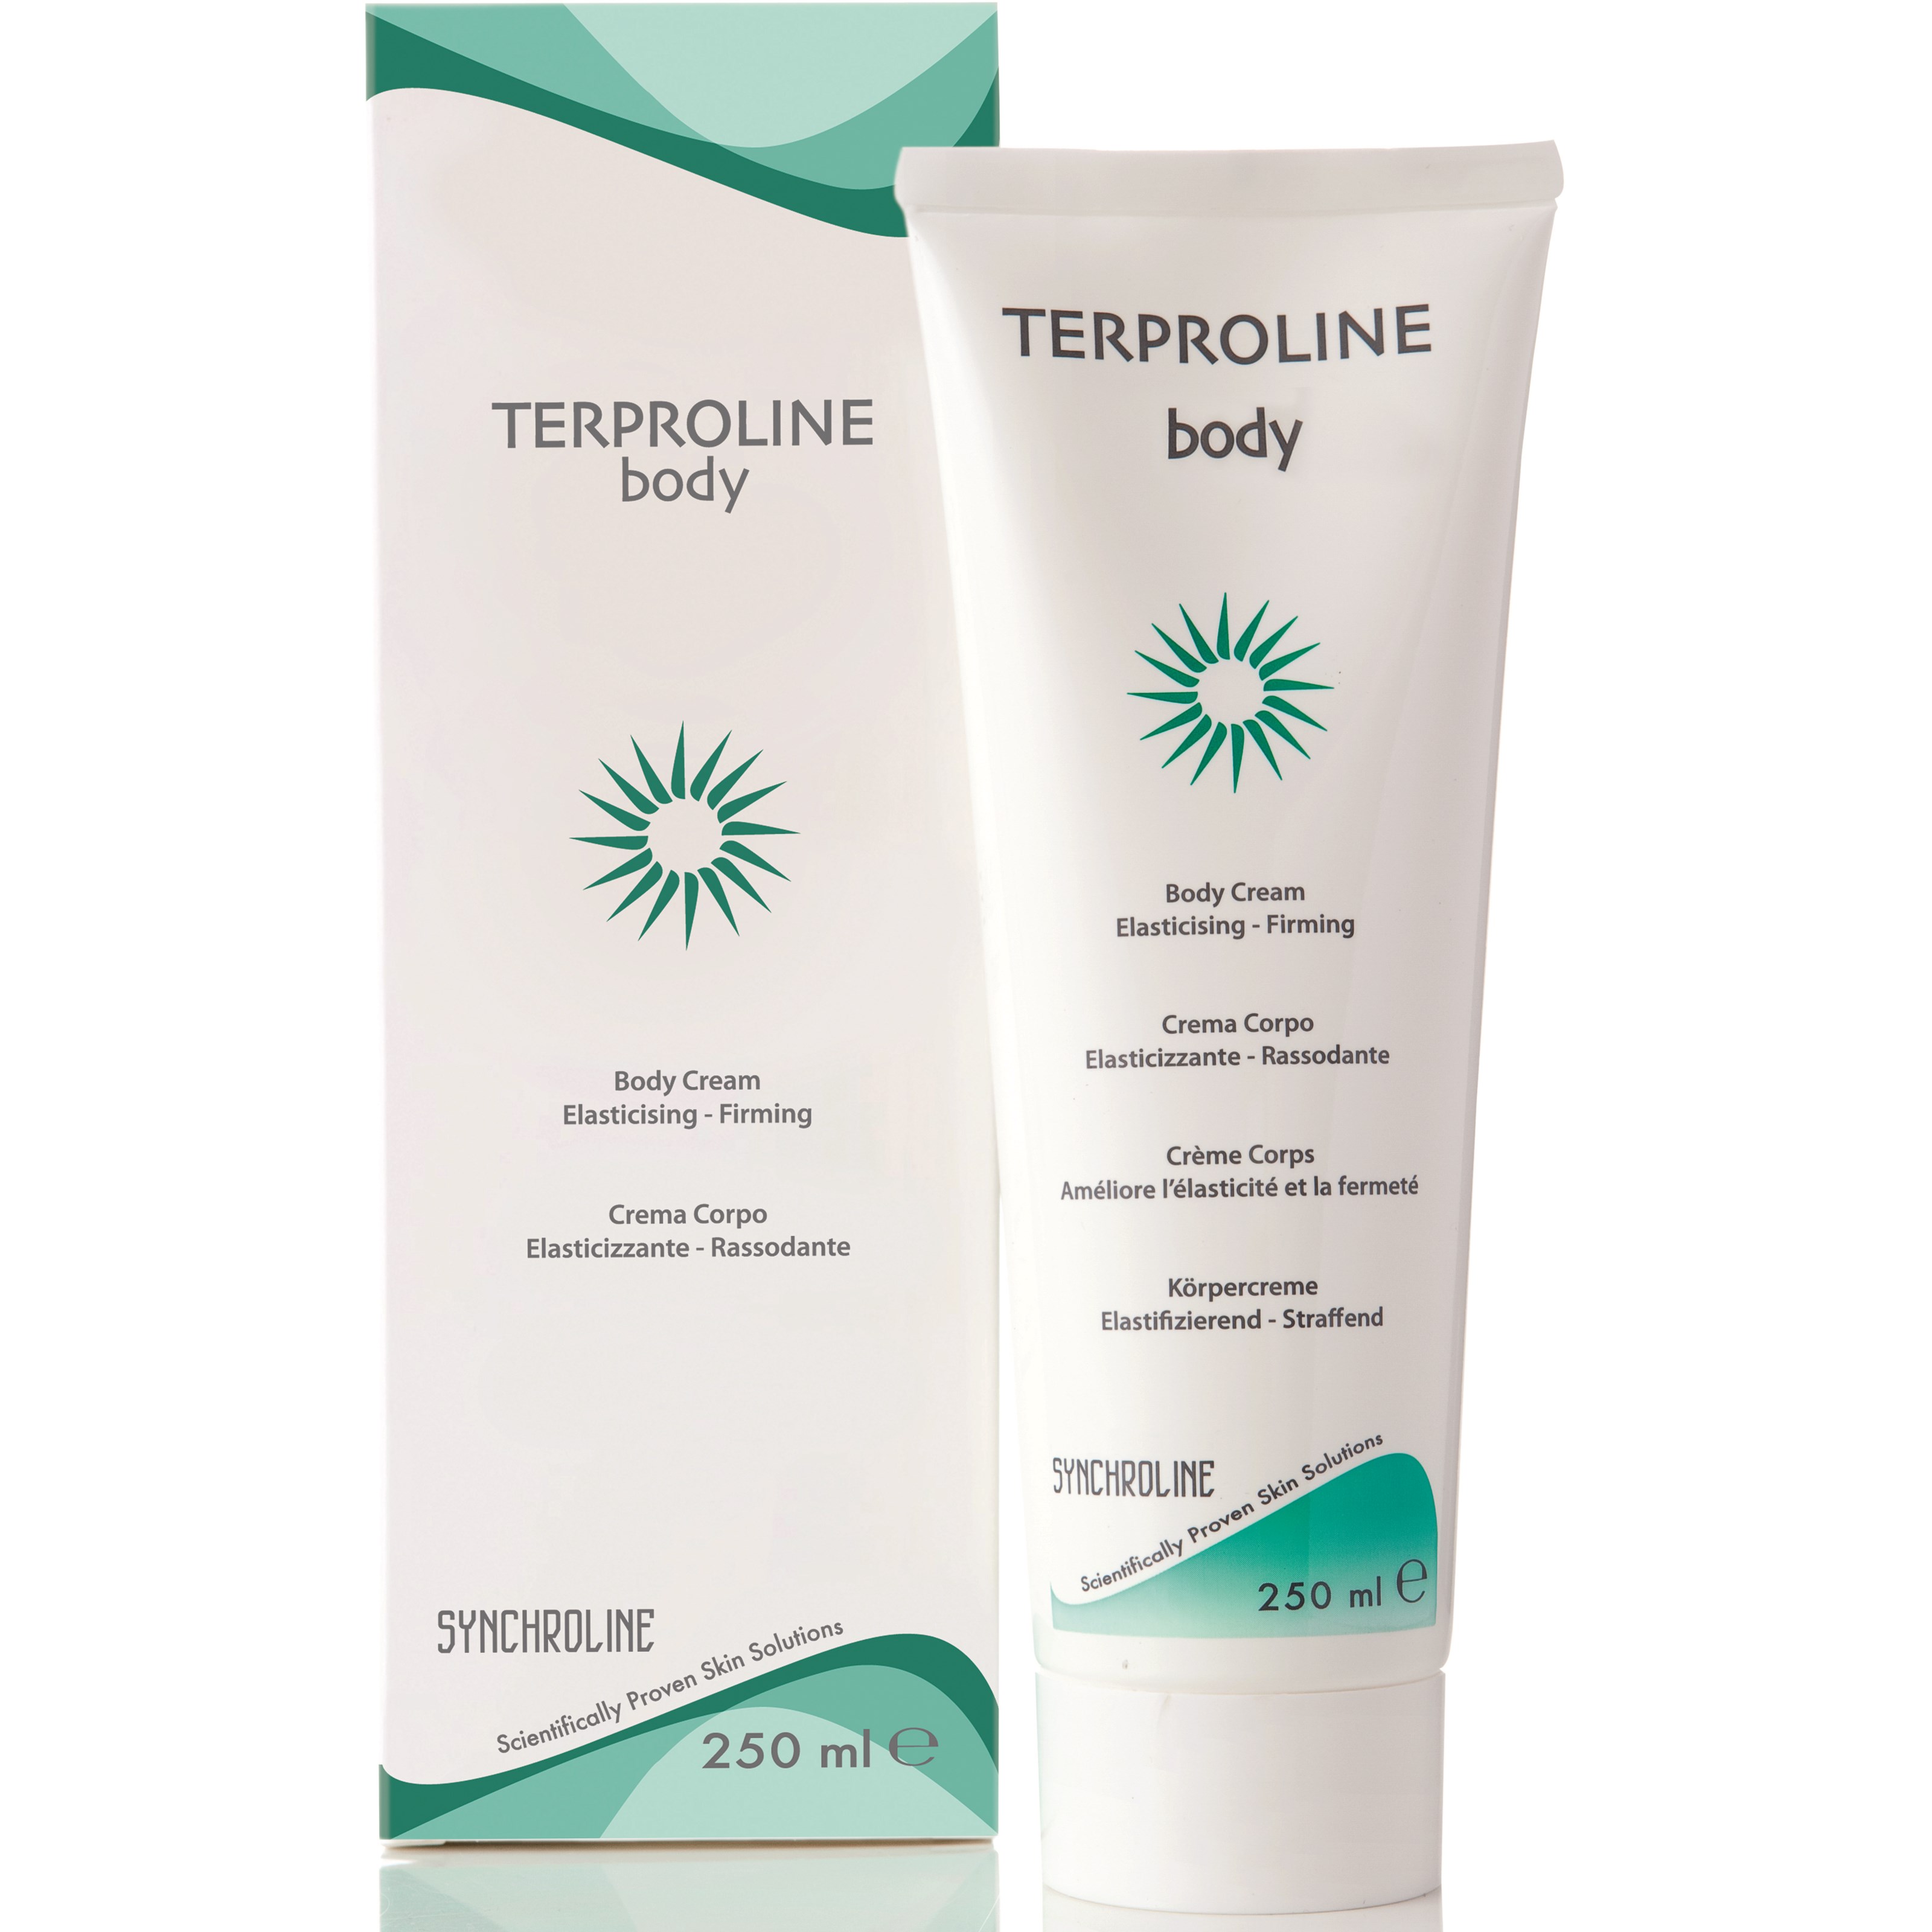 Synchroline Terproline Body Cream 250 ml